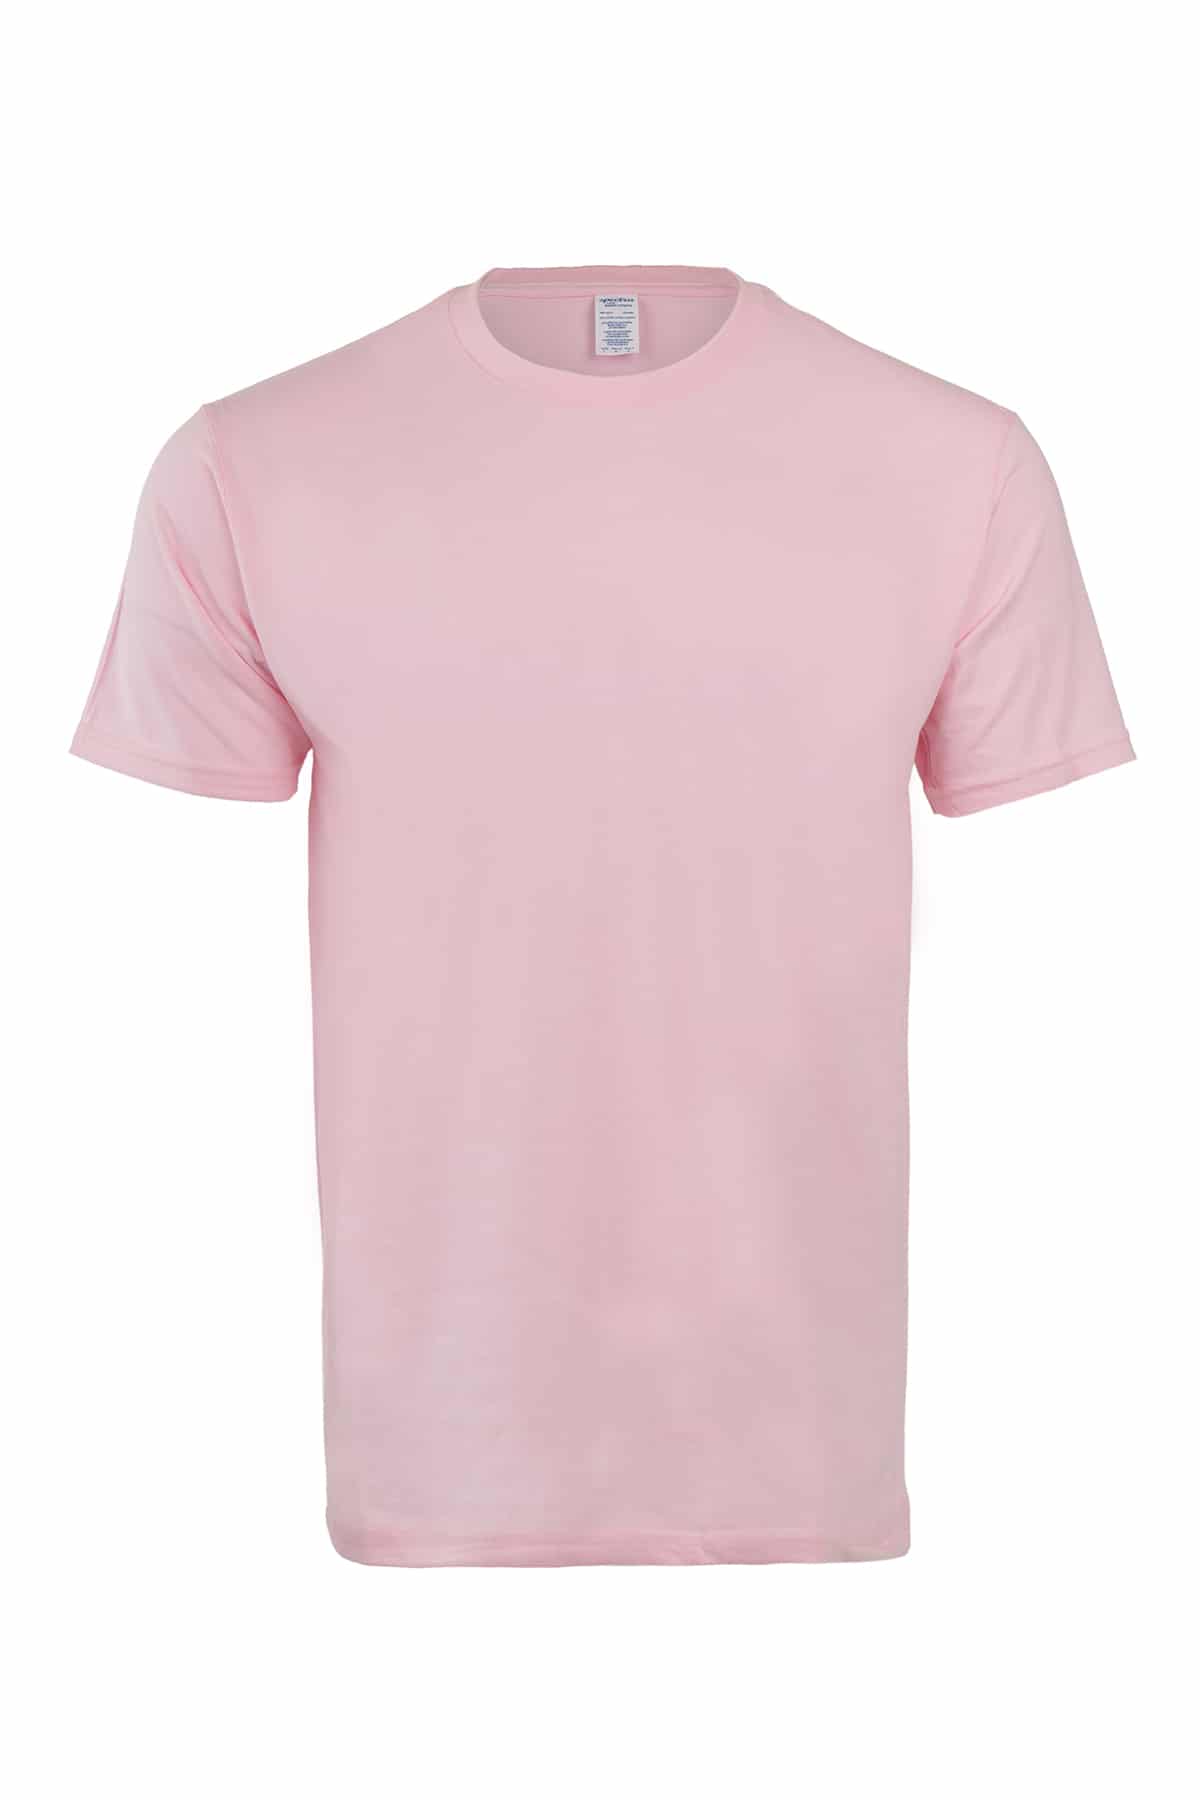 Lt Pink Front T-shirt